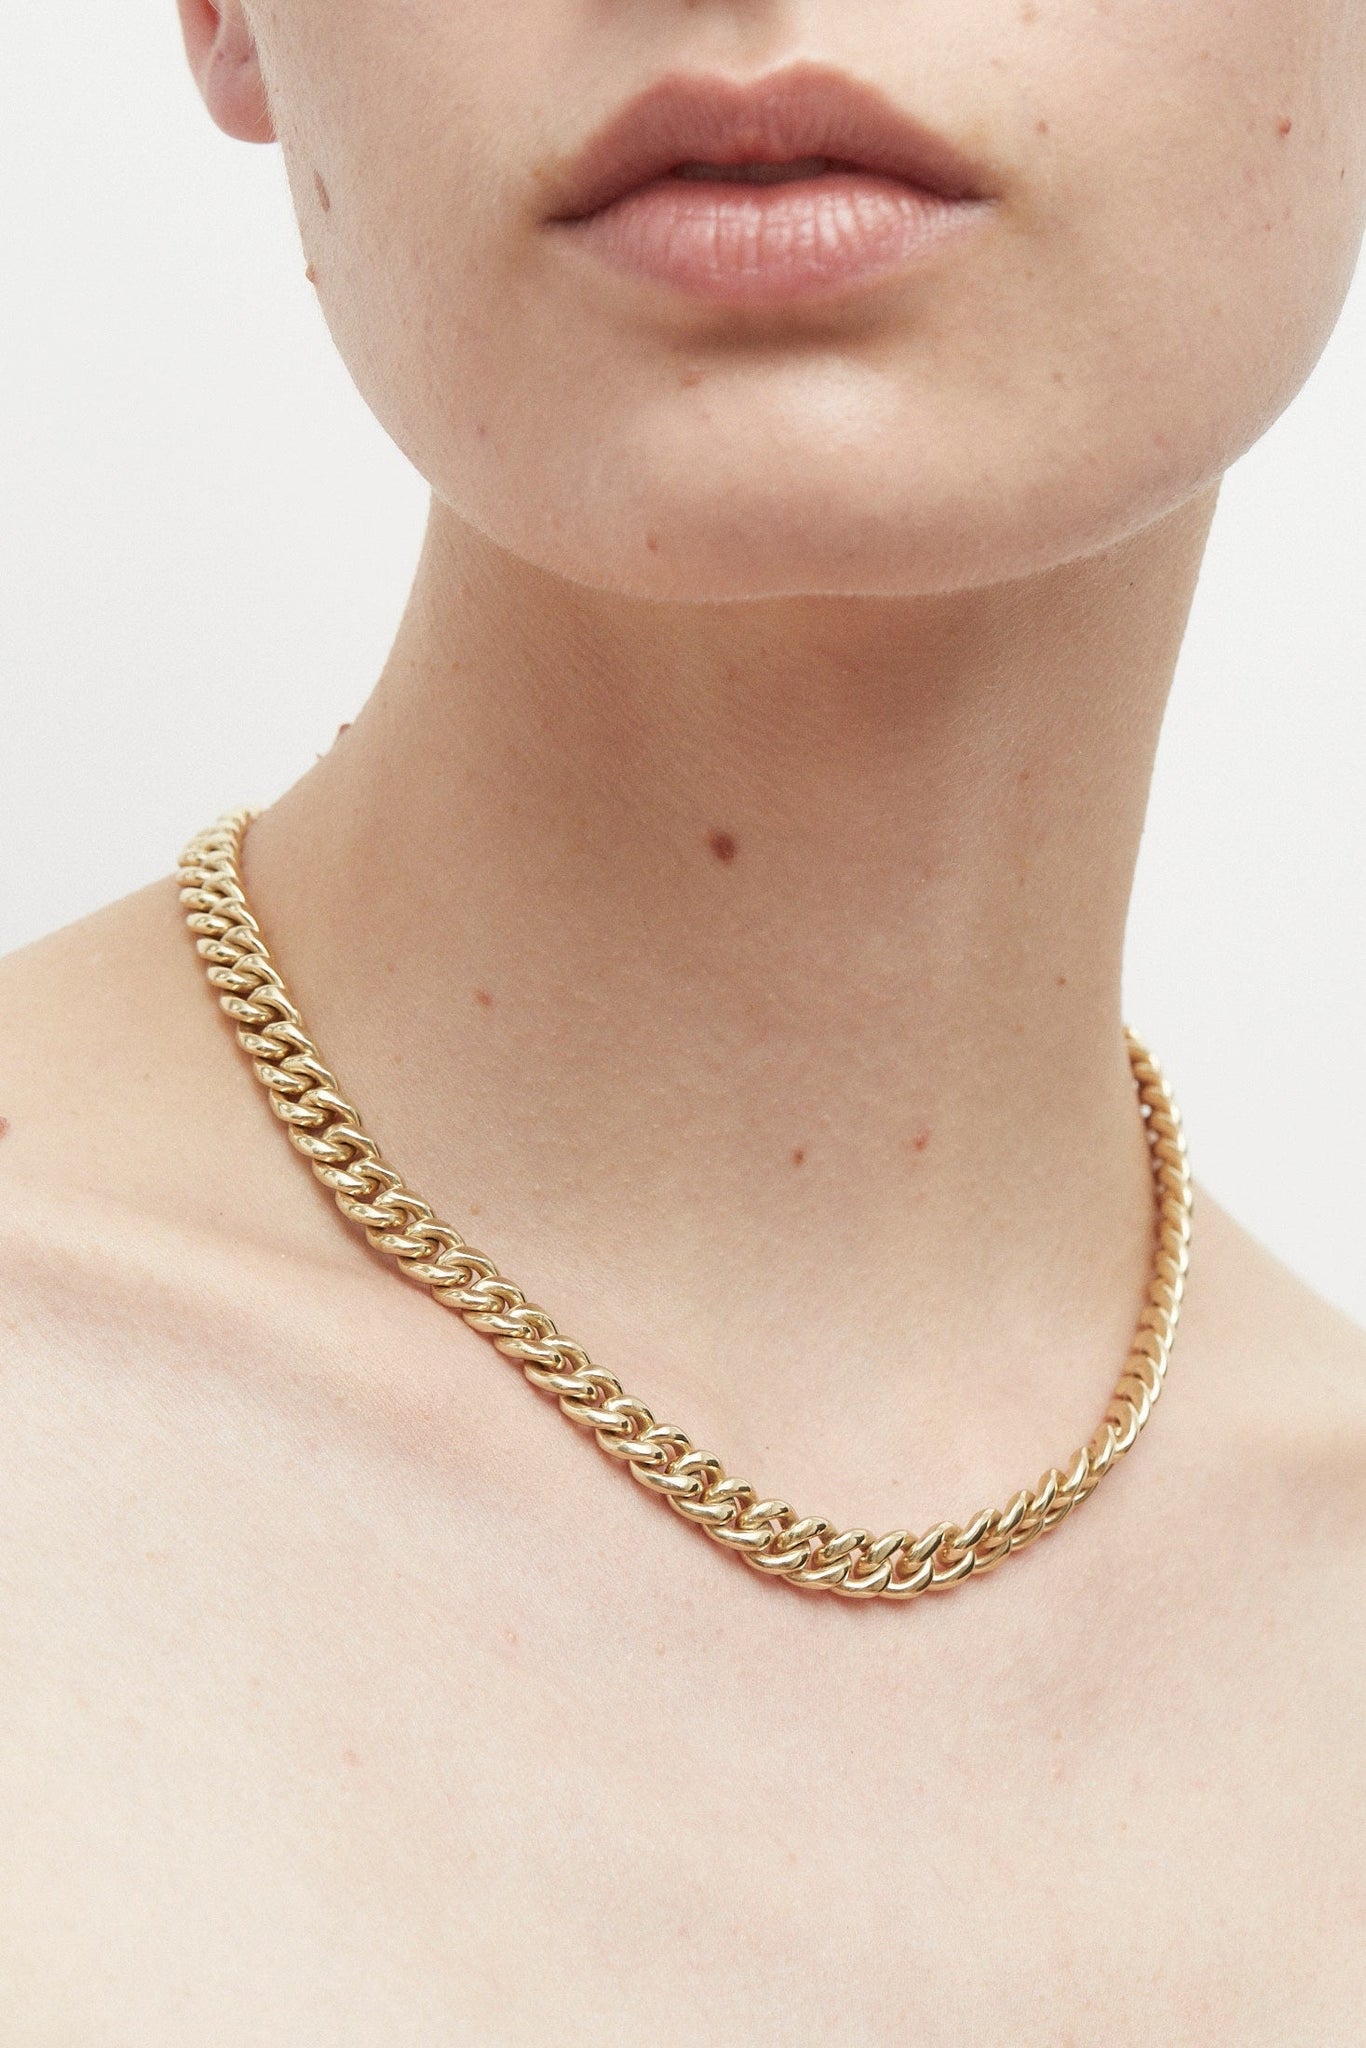 Molded Chain Necklace - Necklaces - Cornelia Webb - 5